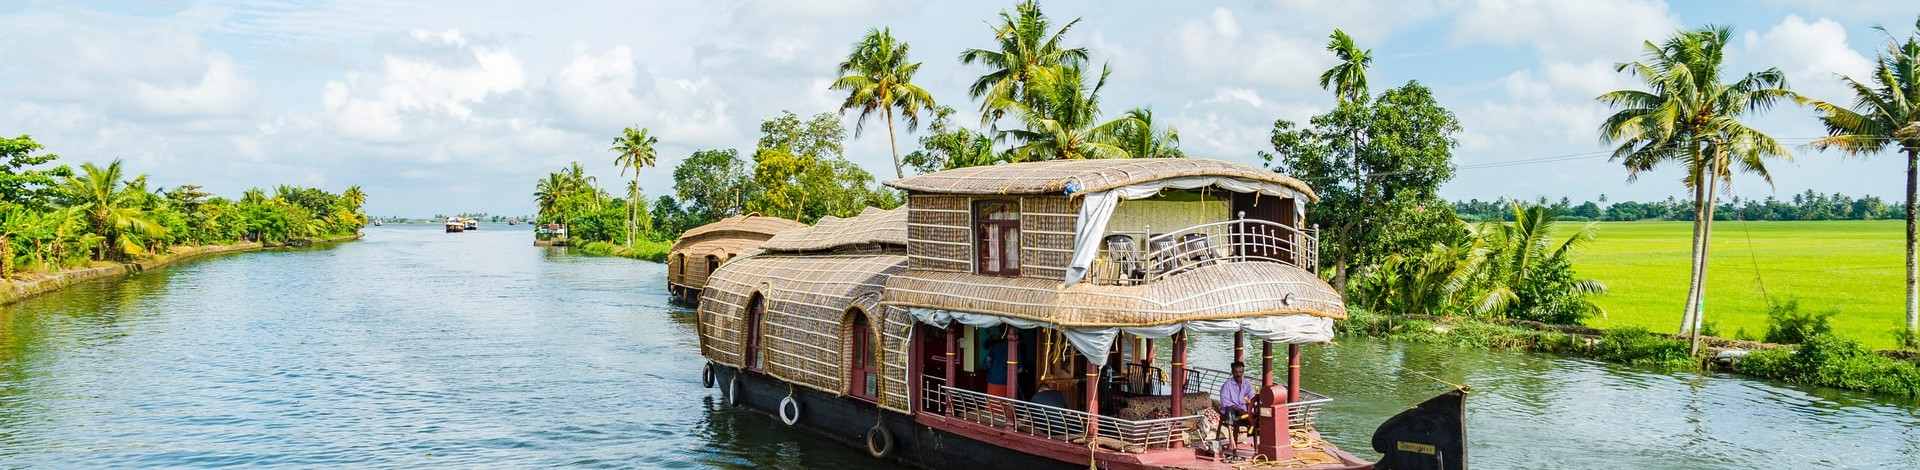 Backwaters Allepey Houseboat Kerala